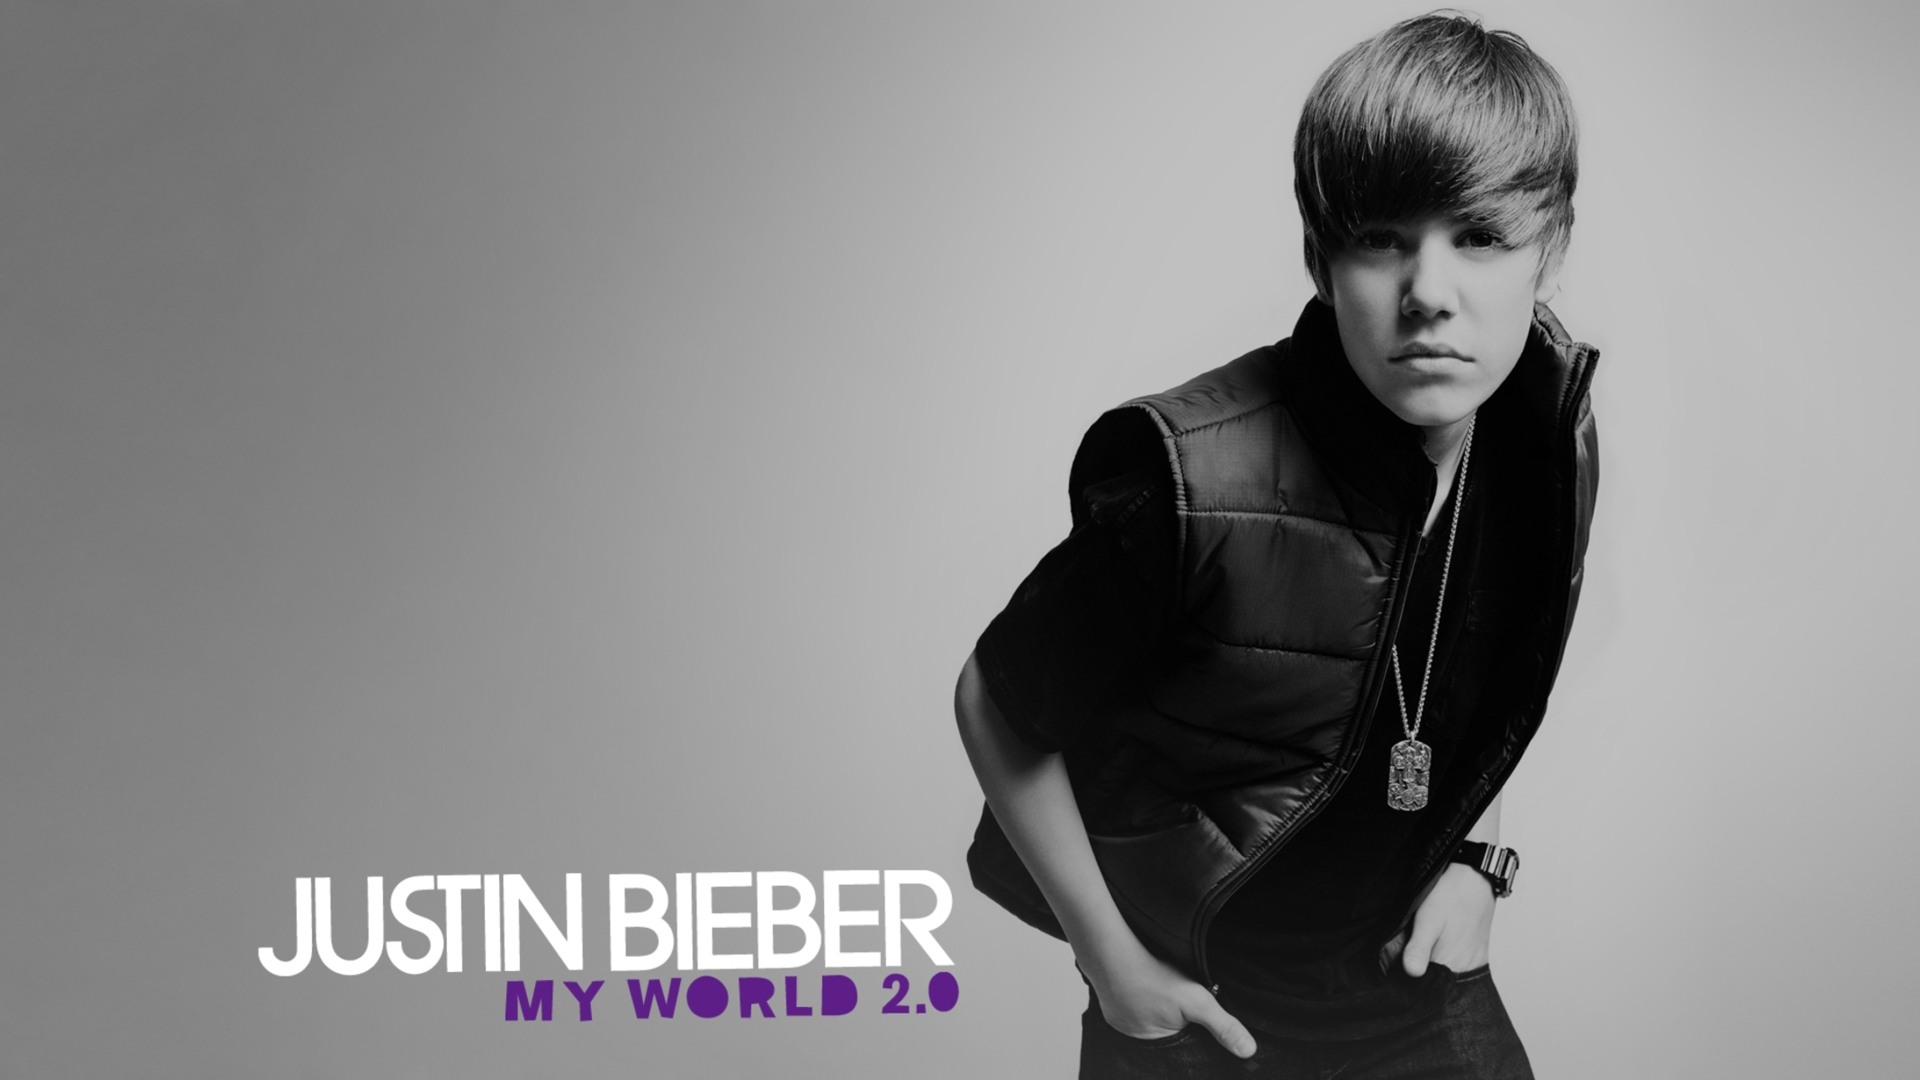 Justin Bieber Full HD Wallpapers download 1080p desktop backgrounds